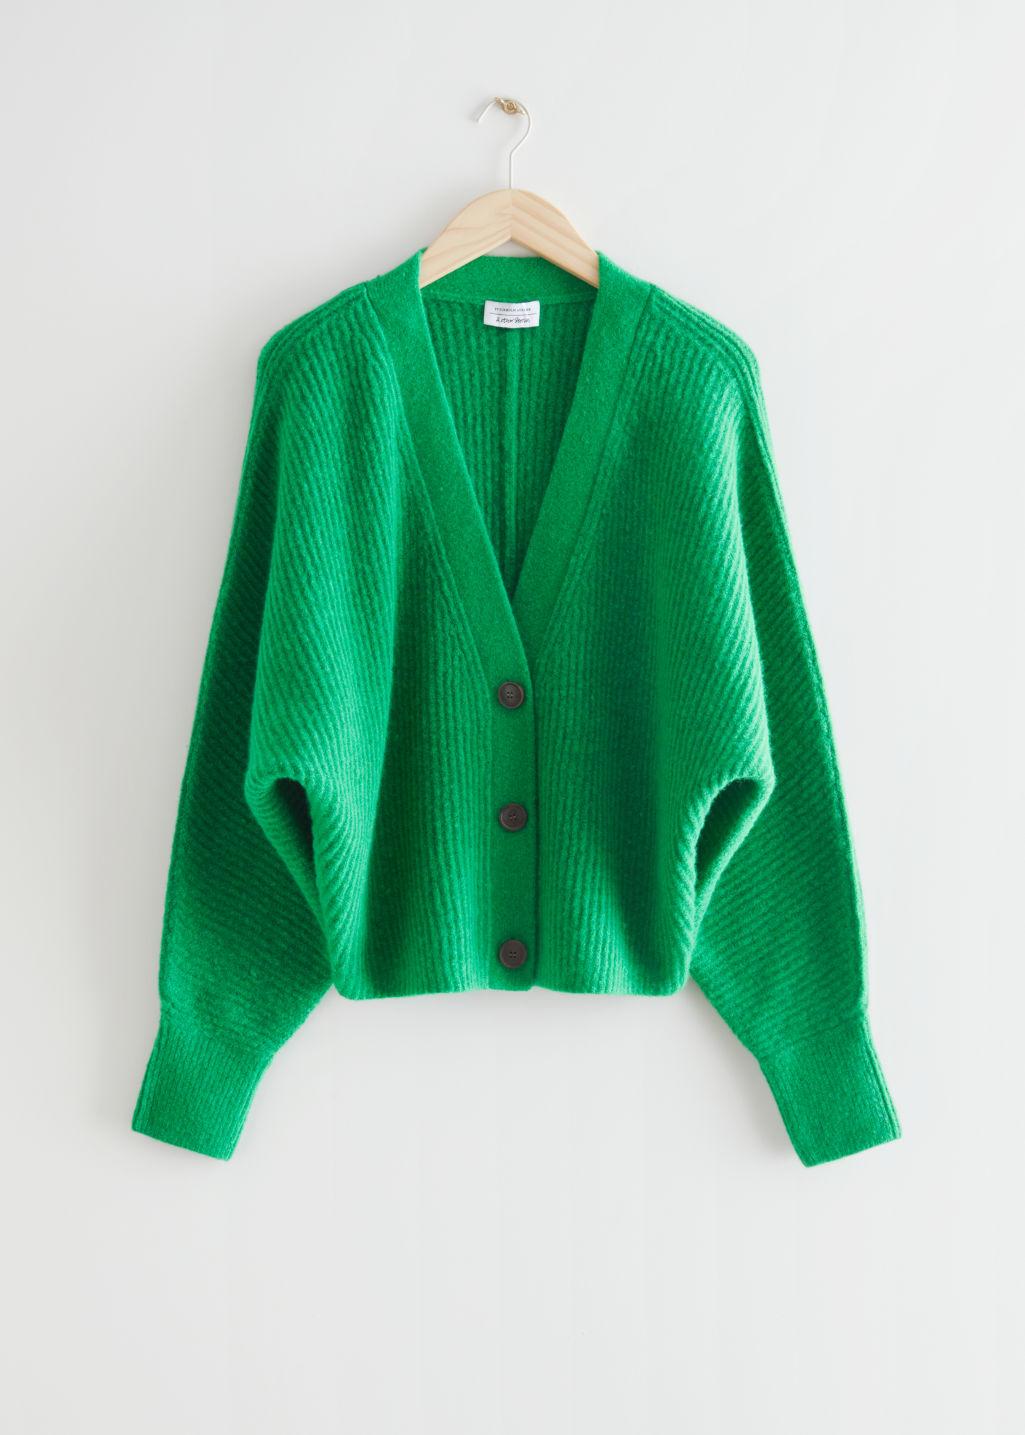 & Other Stories Wool Voluminous Rib Knit Cardigan in Green | Lyst